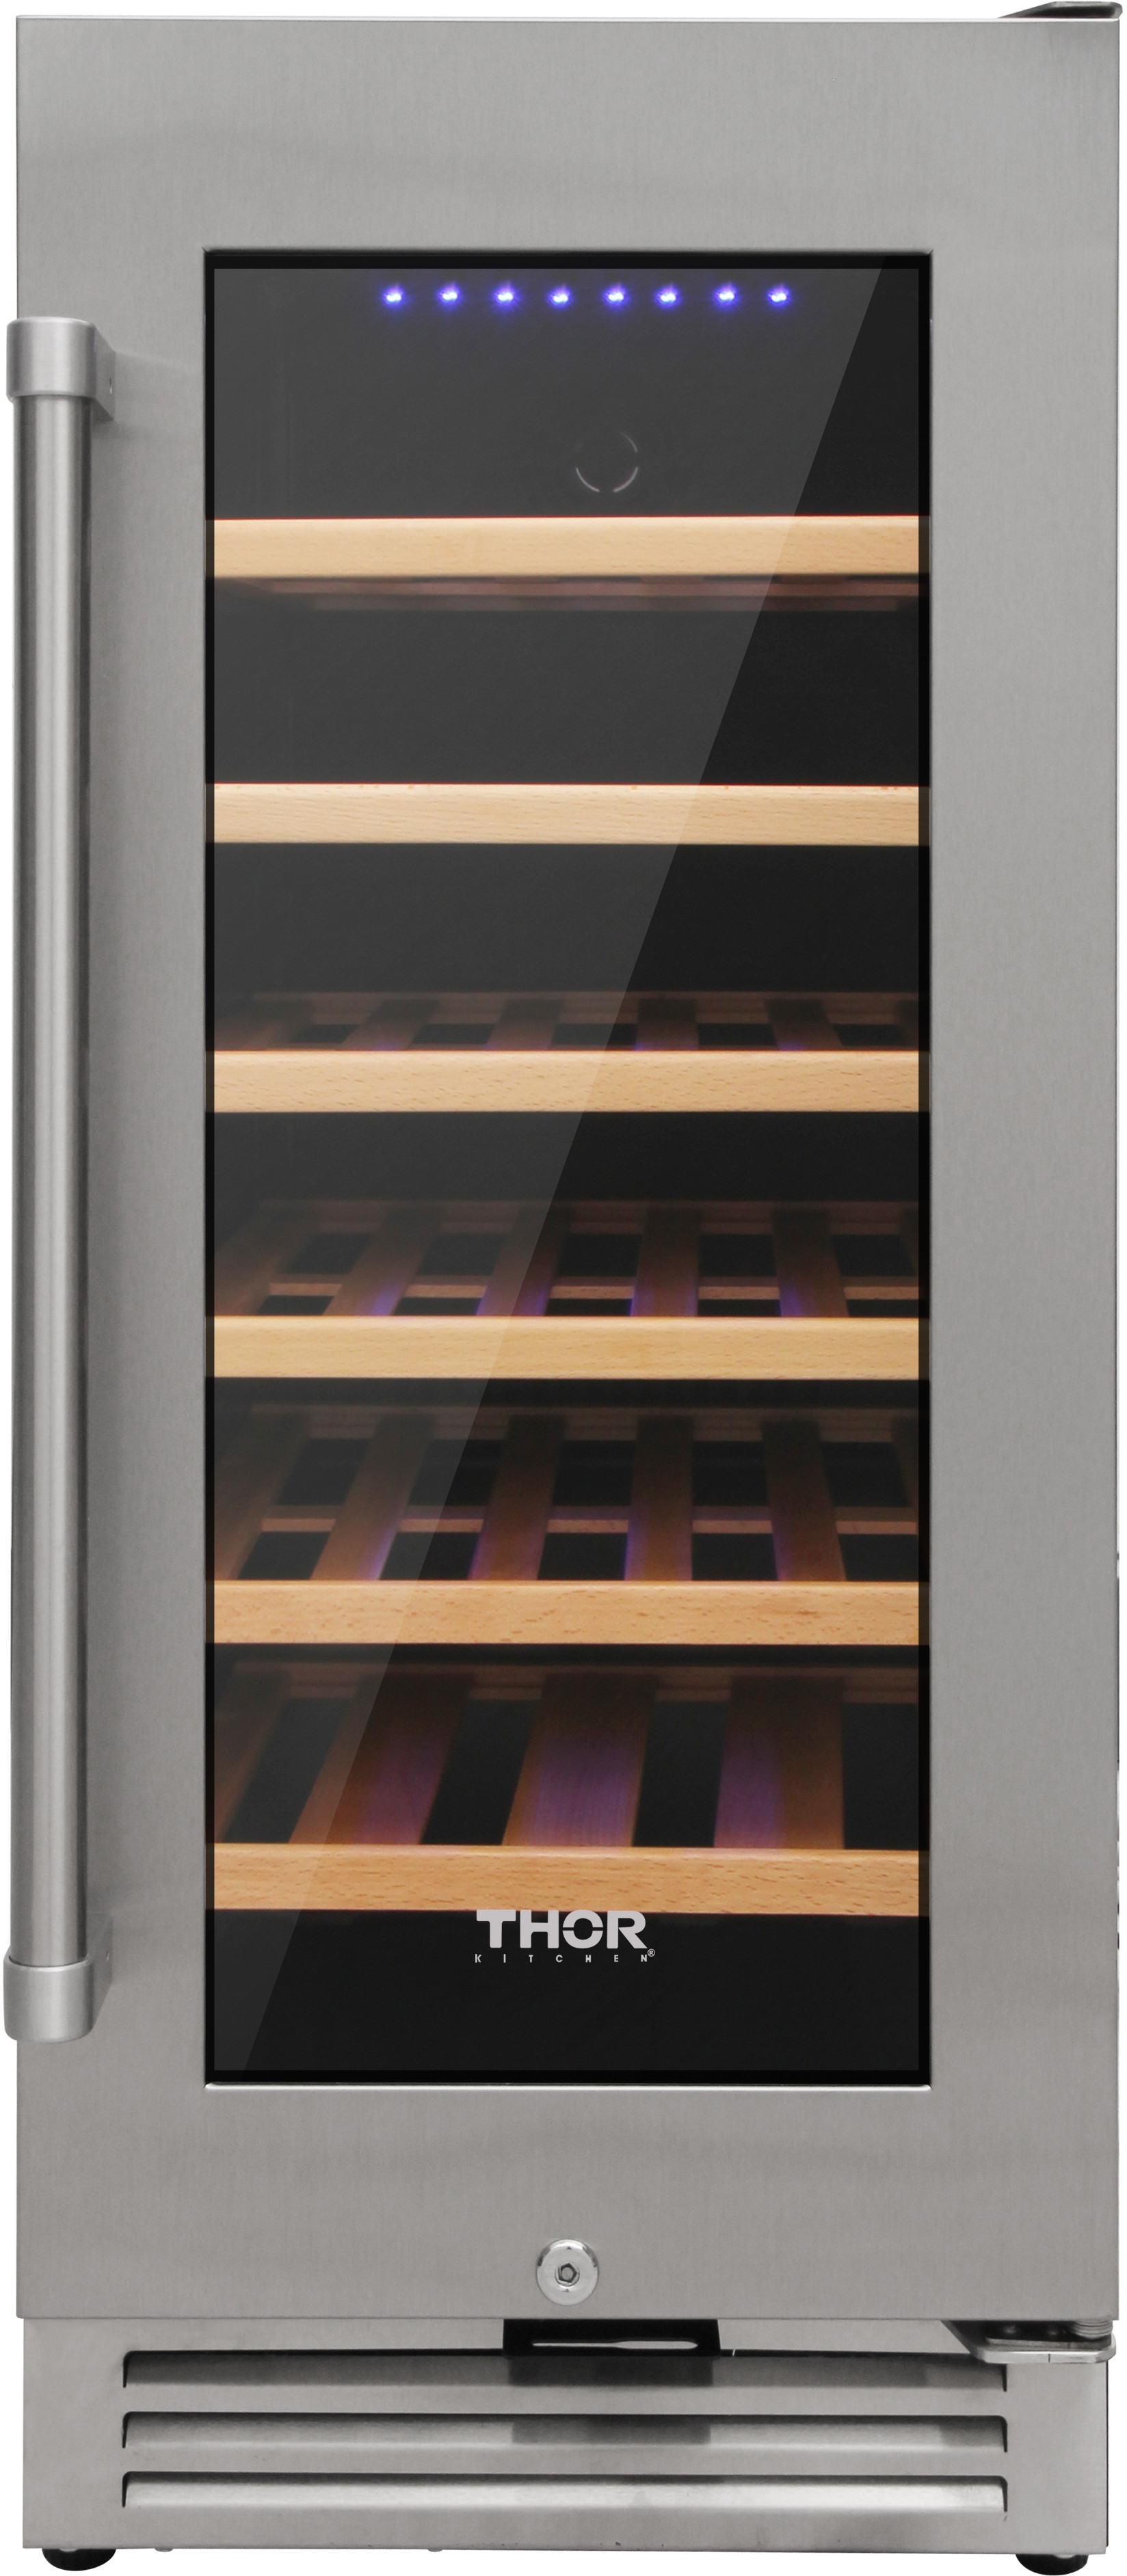 15"" Freestanding/Built In Undercounter Wine Cooler - Thor Kitchen TWC1501